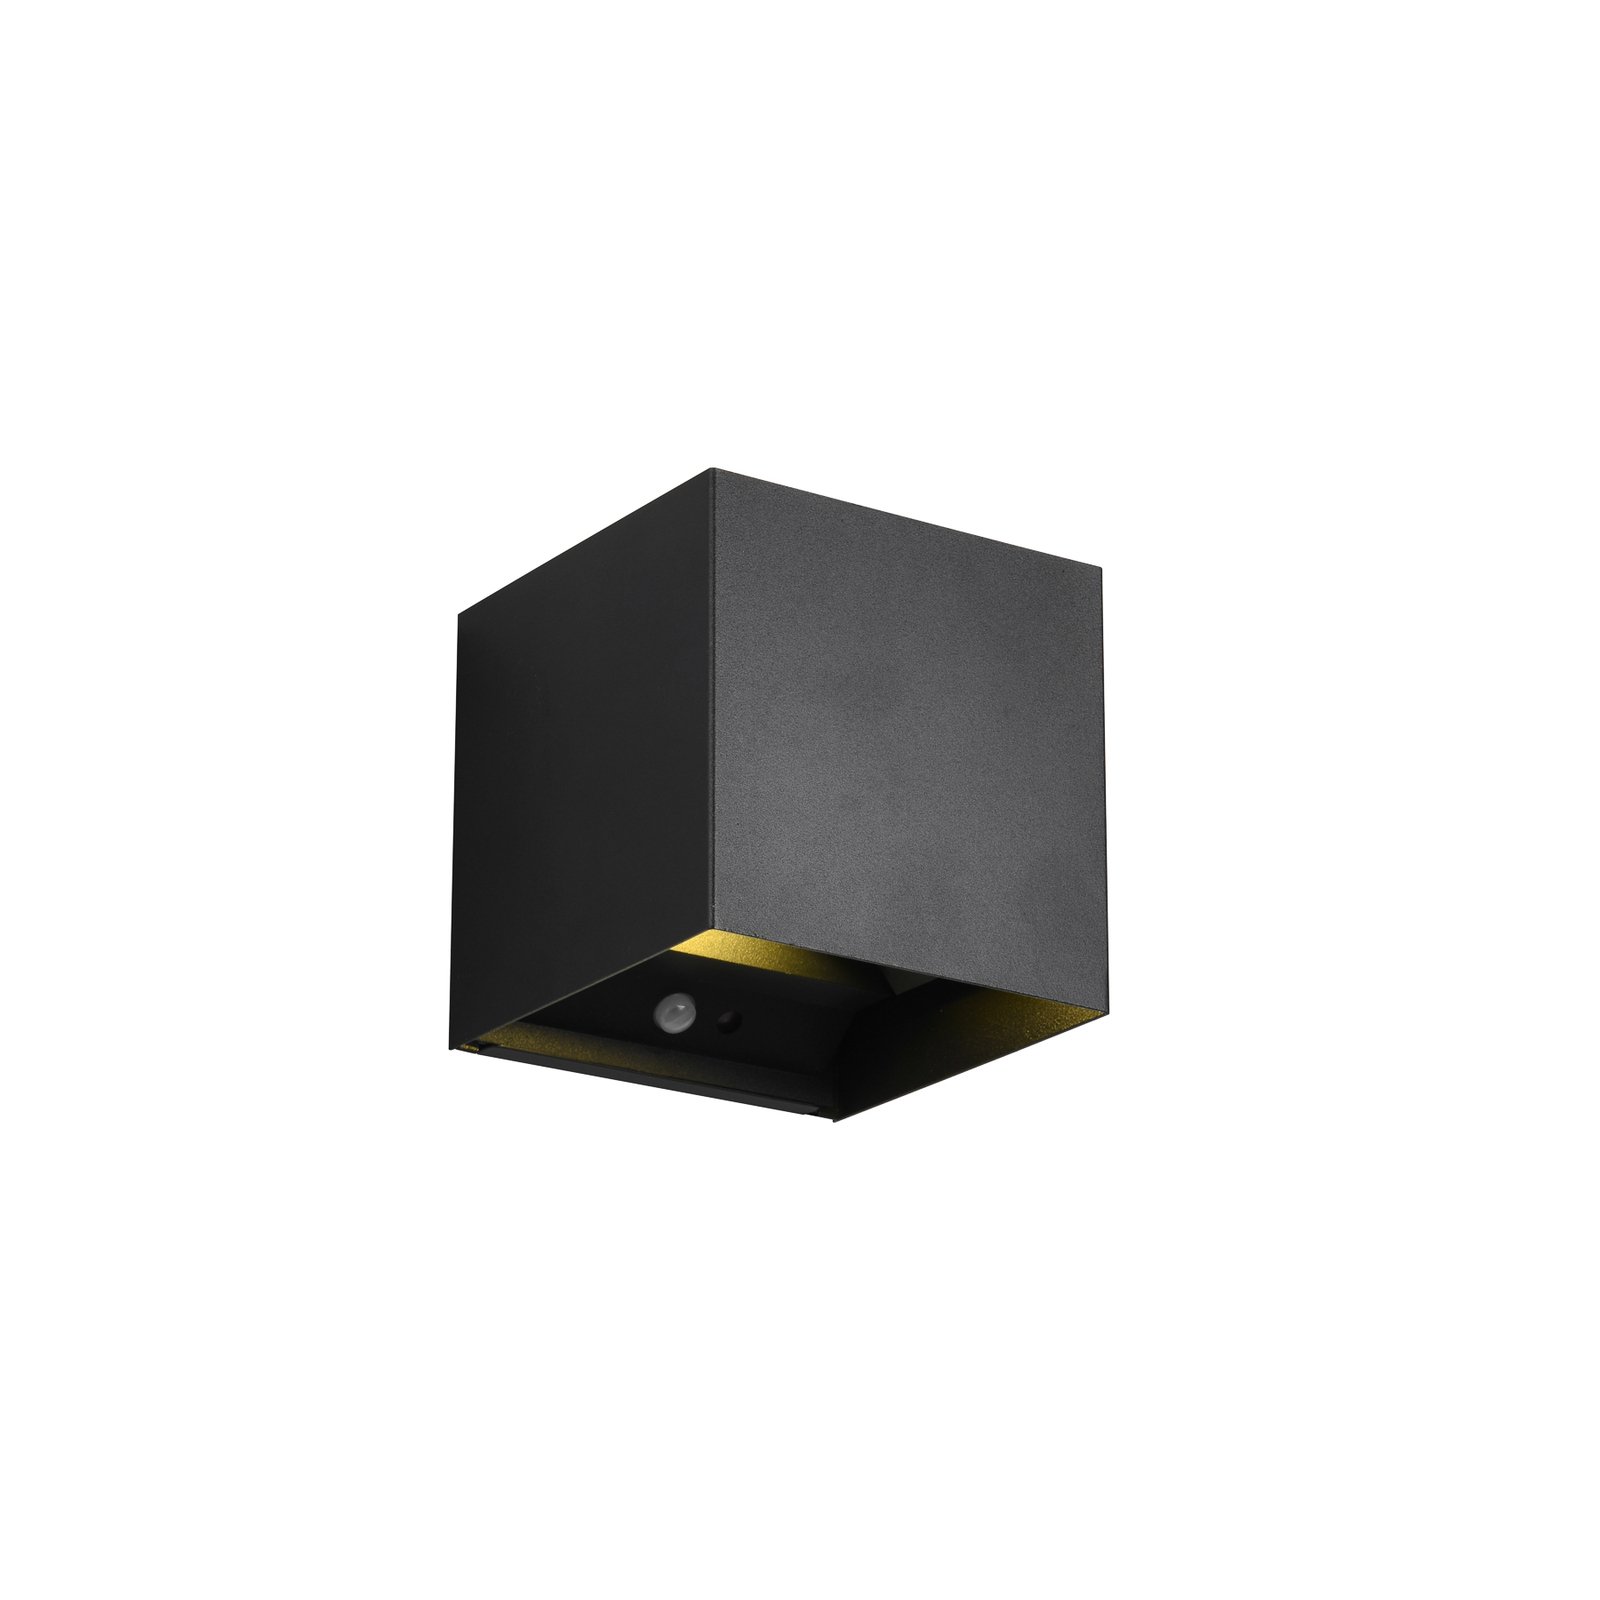 LED outdoor wall lamp Talent, black, width 10 cm Sensor